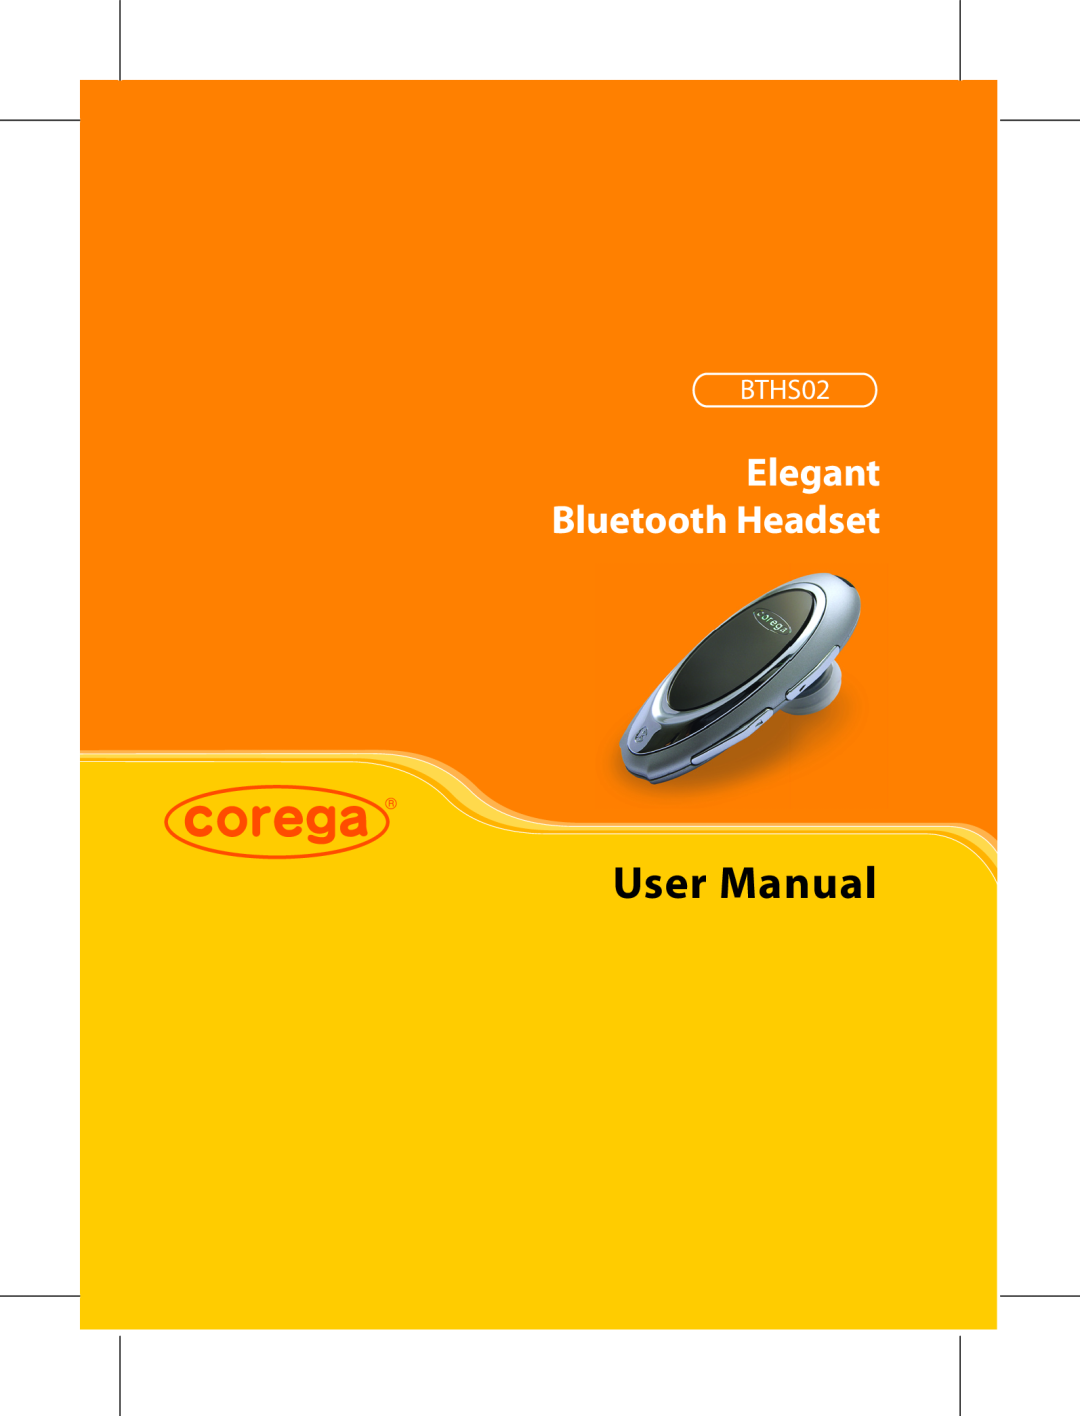 Corega BTHS02 user manual Elegant Bluetooth Headset 